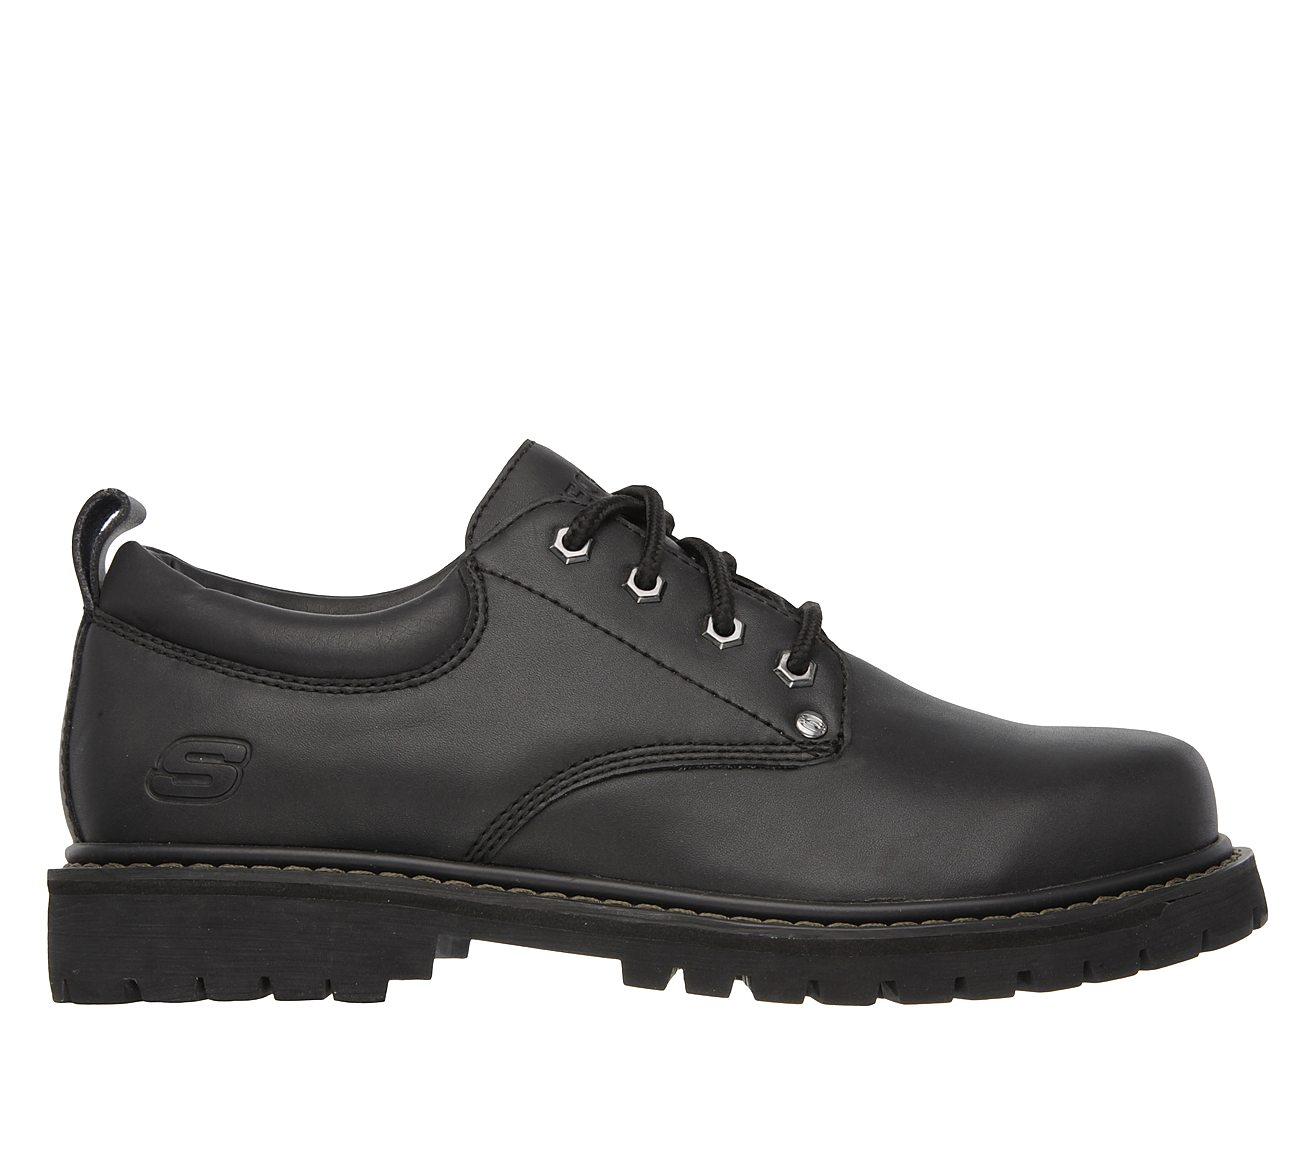 men's skechers shoes leather upper